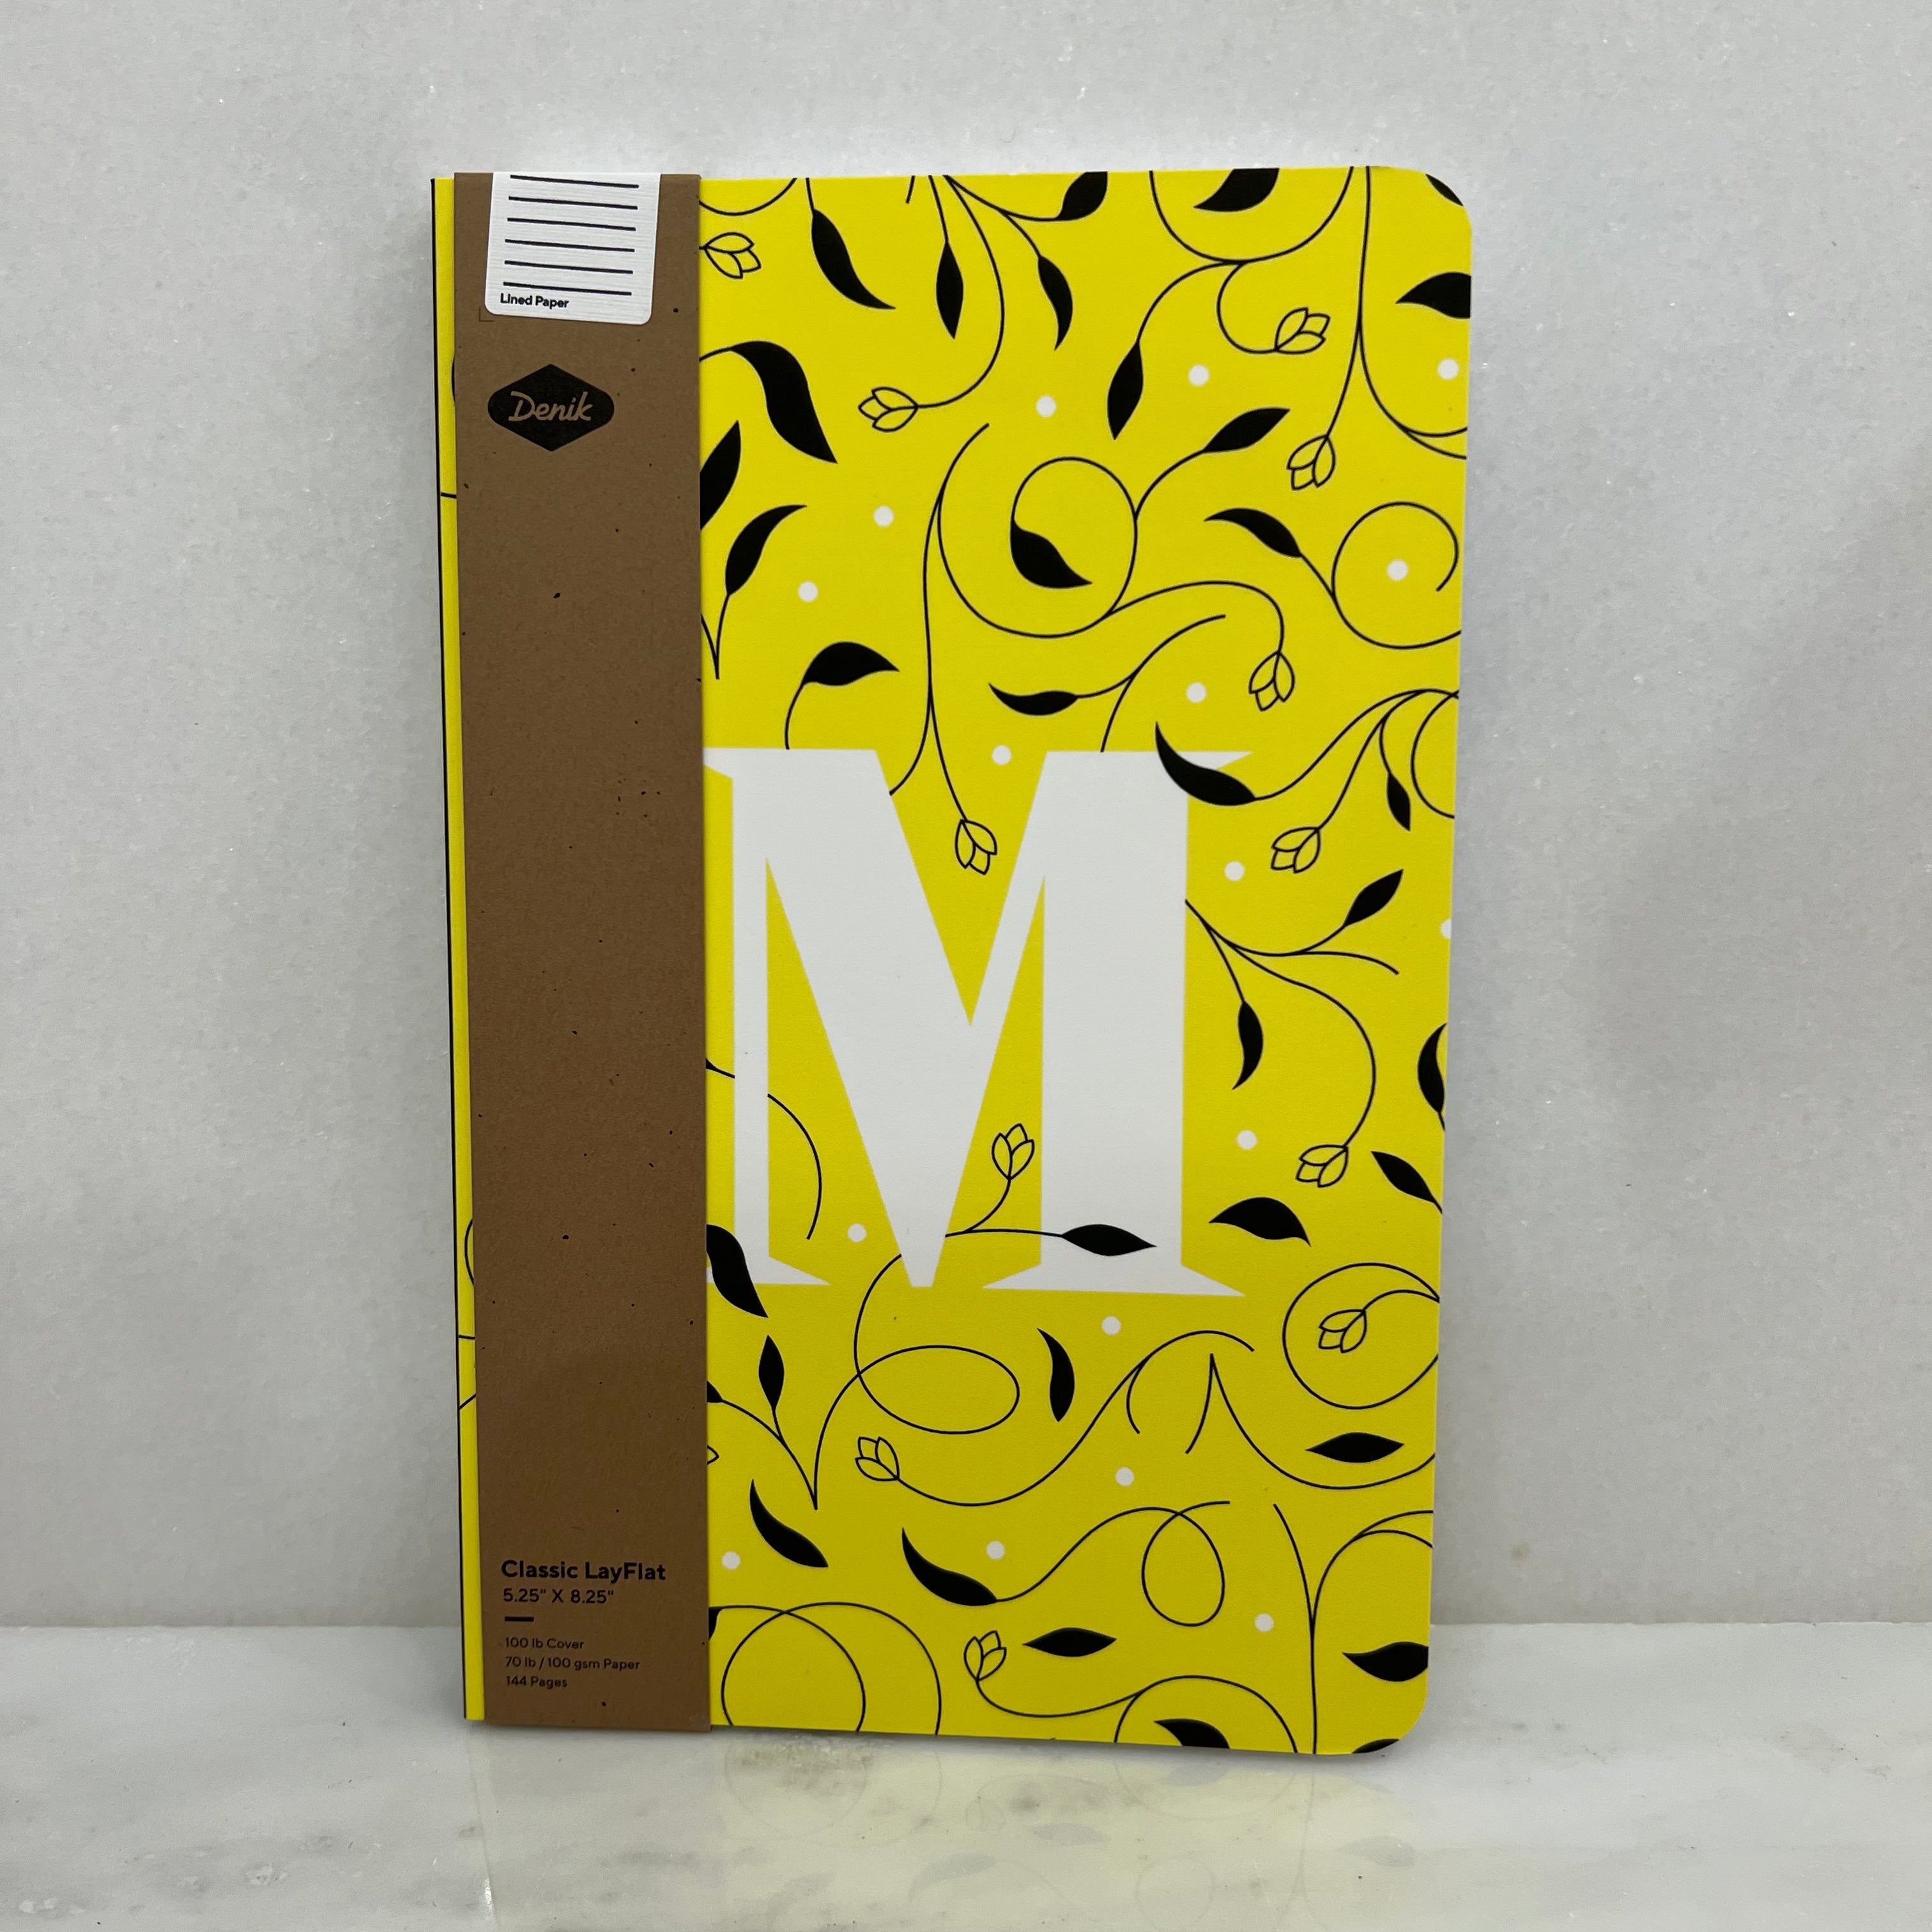 Denik "M" classic layflat notebook